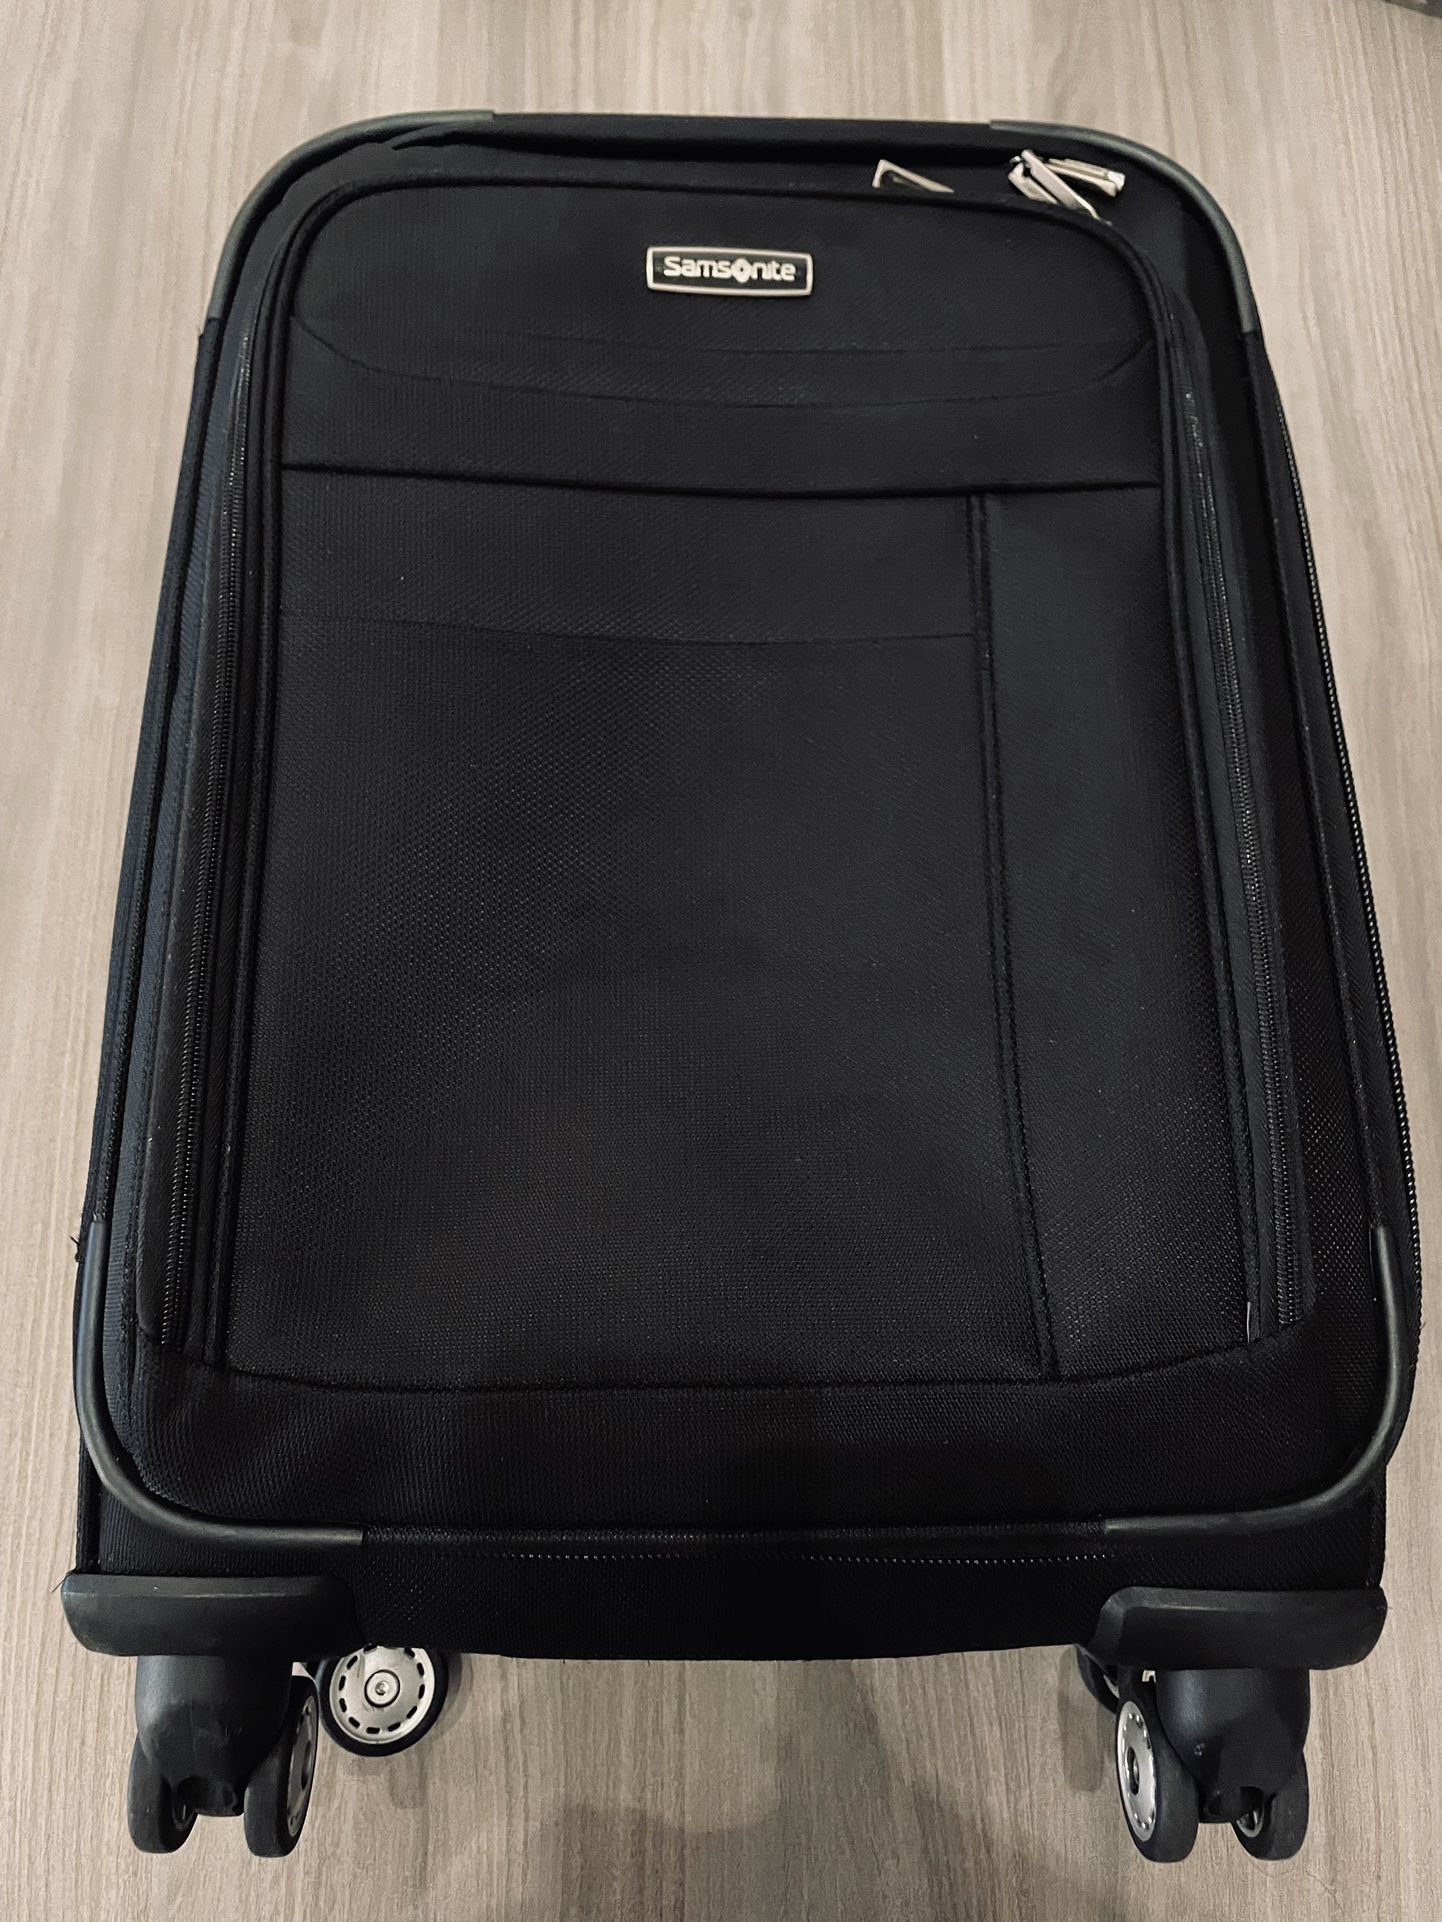 Samsonite Spinner Carry On Luggage Bag 22x10x14